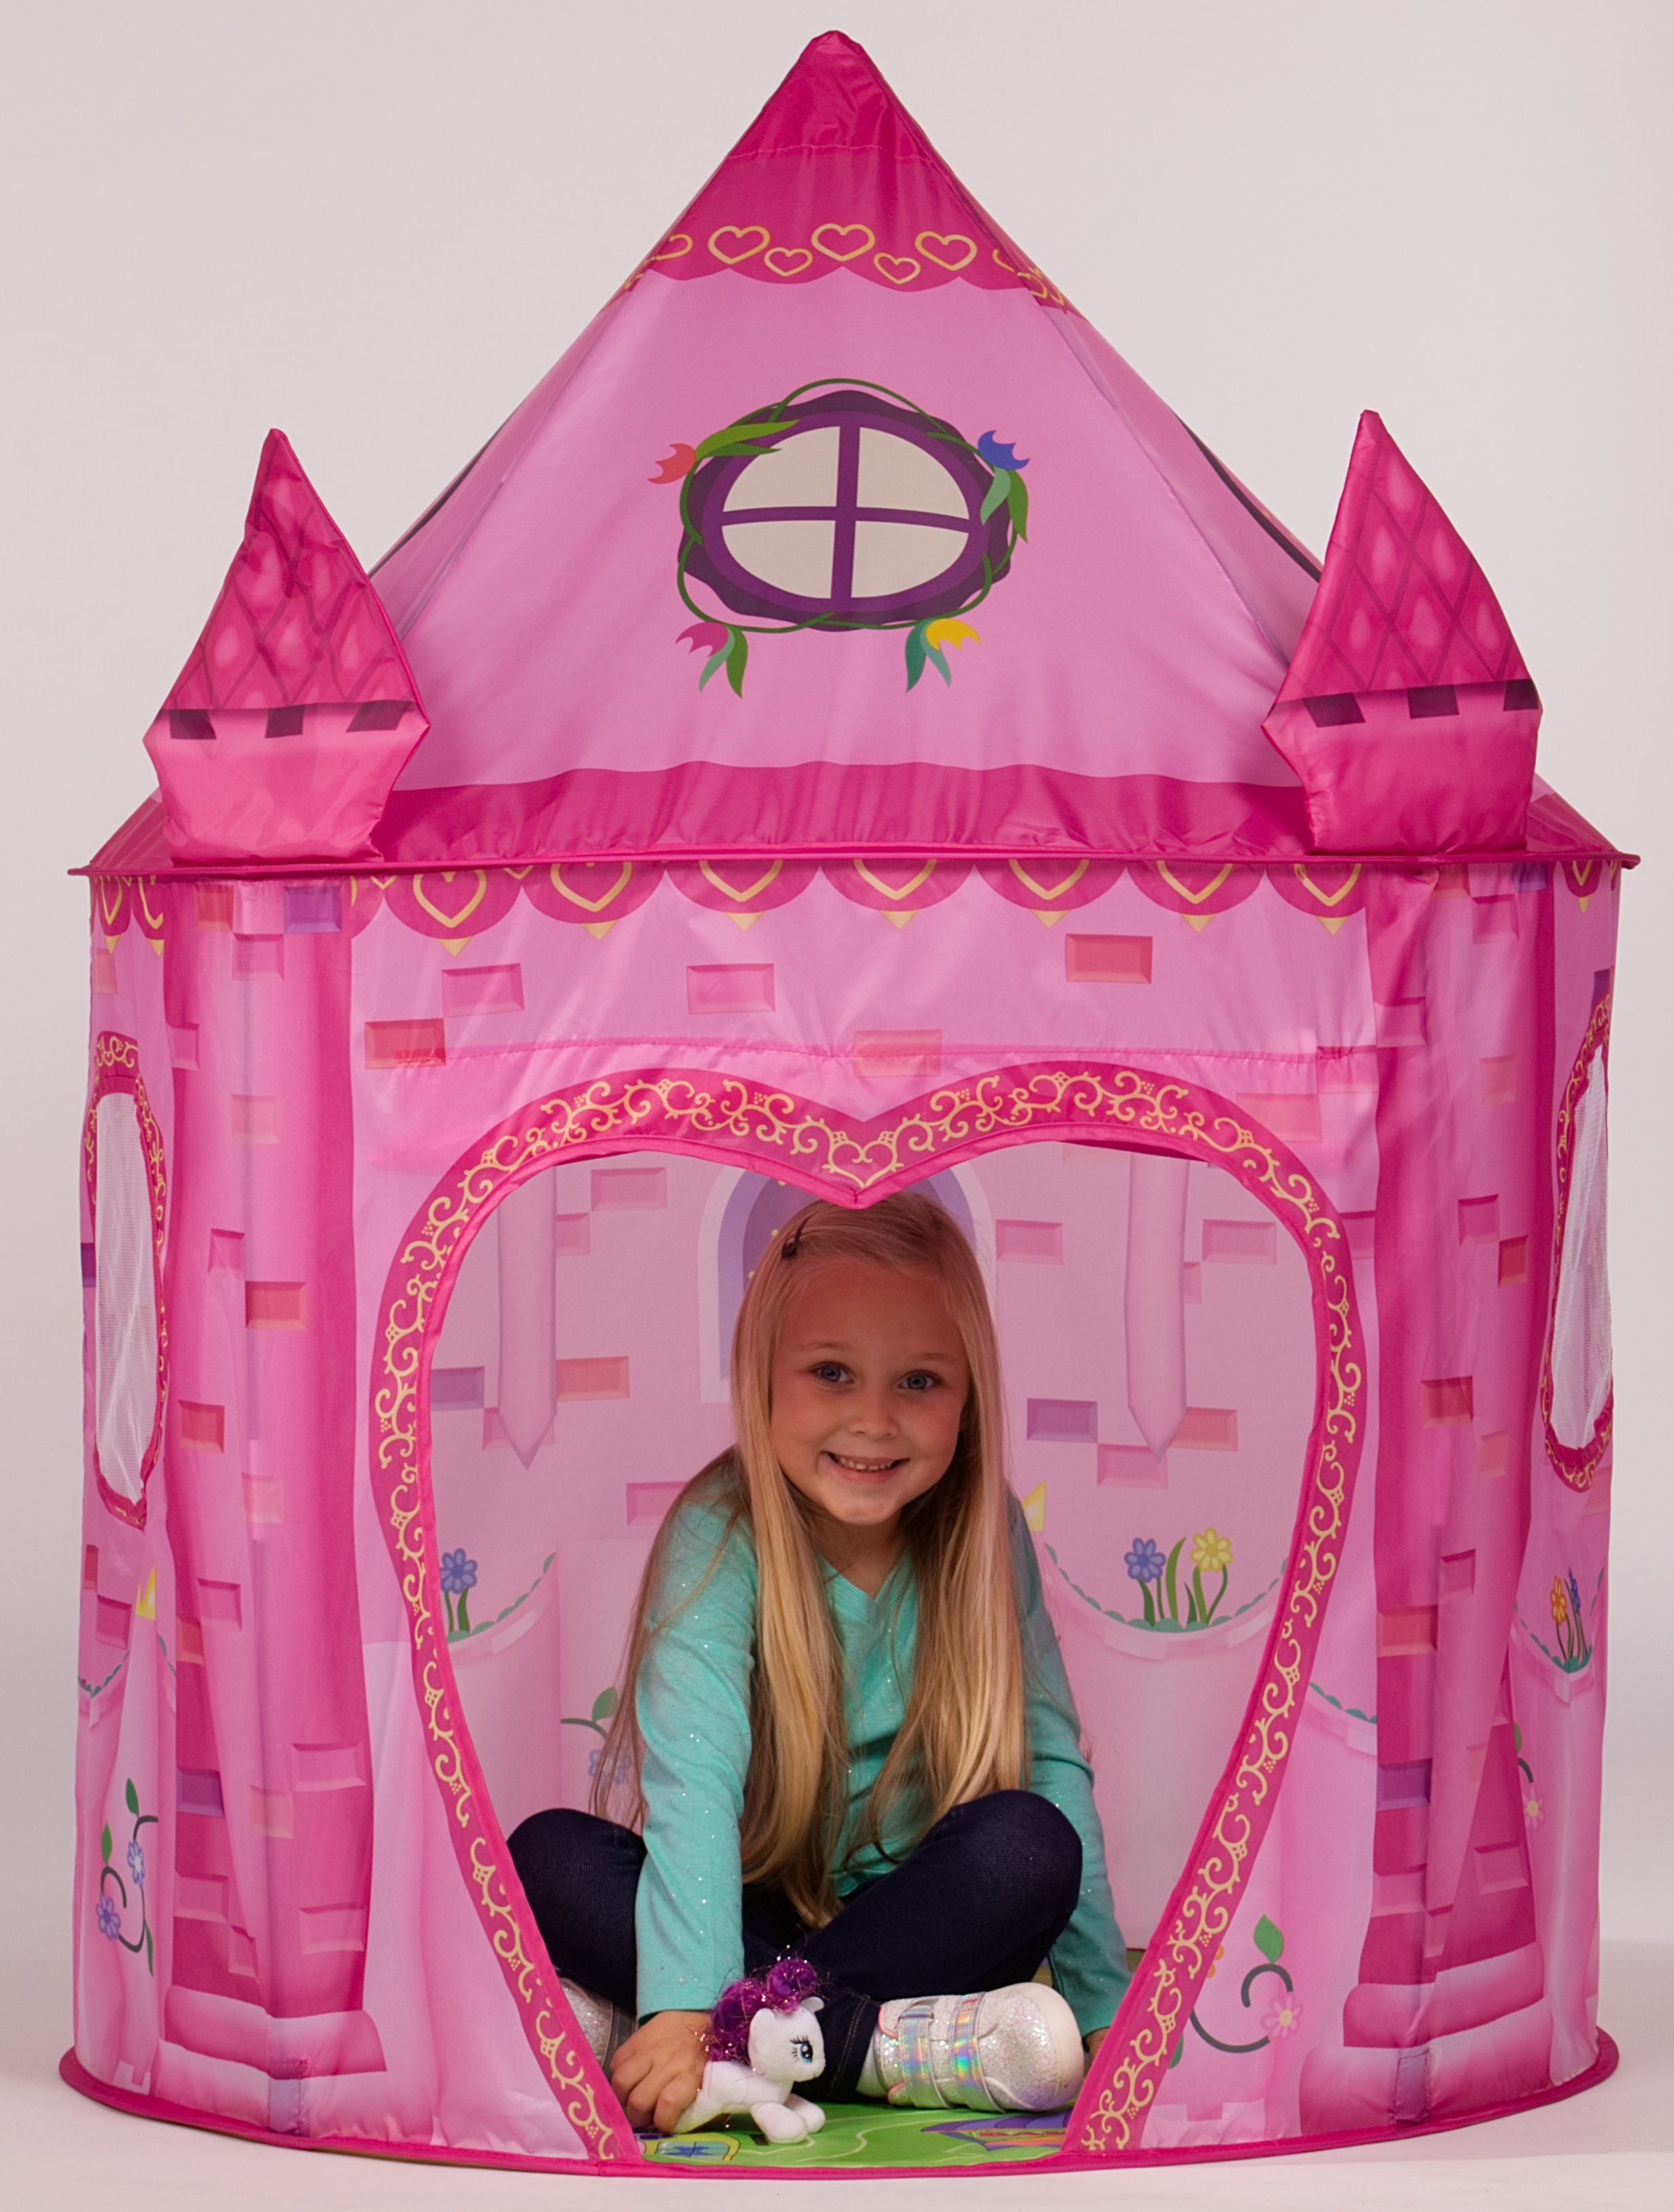 Ridecle Princess Castle,Play Tent Large Kids Play House Princess Tent Girls Large Playhouse Kids Castle Play Tent Play Tent with Tent Package /51.1837.451.18in 